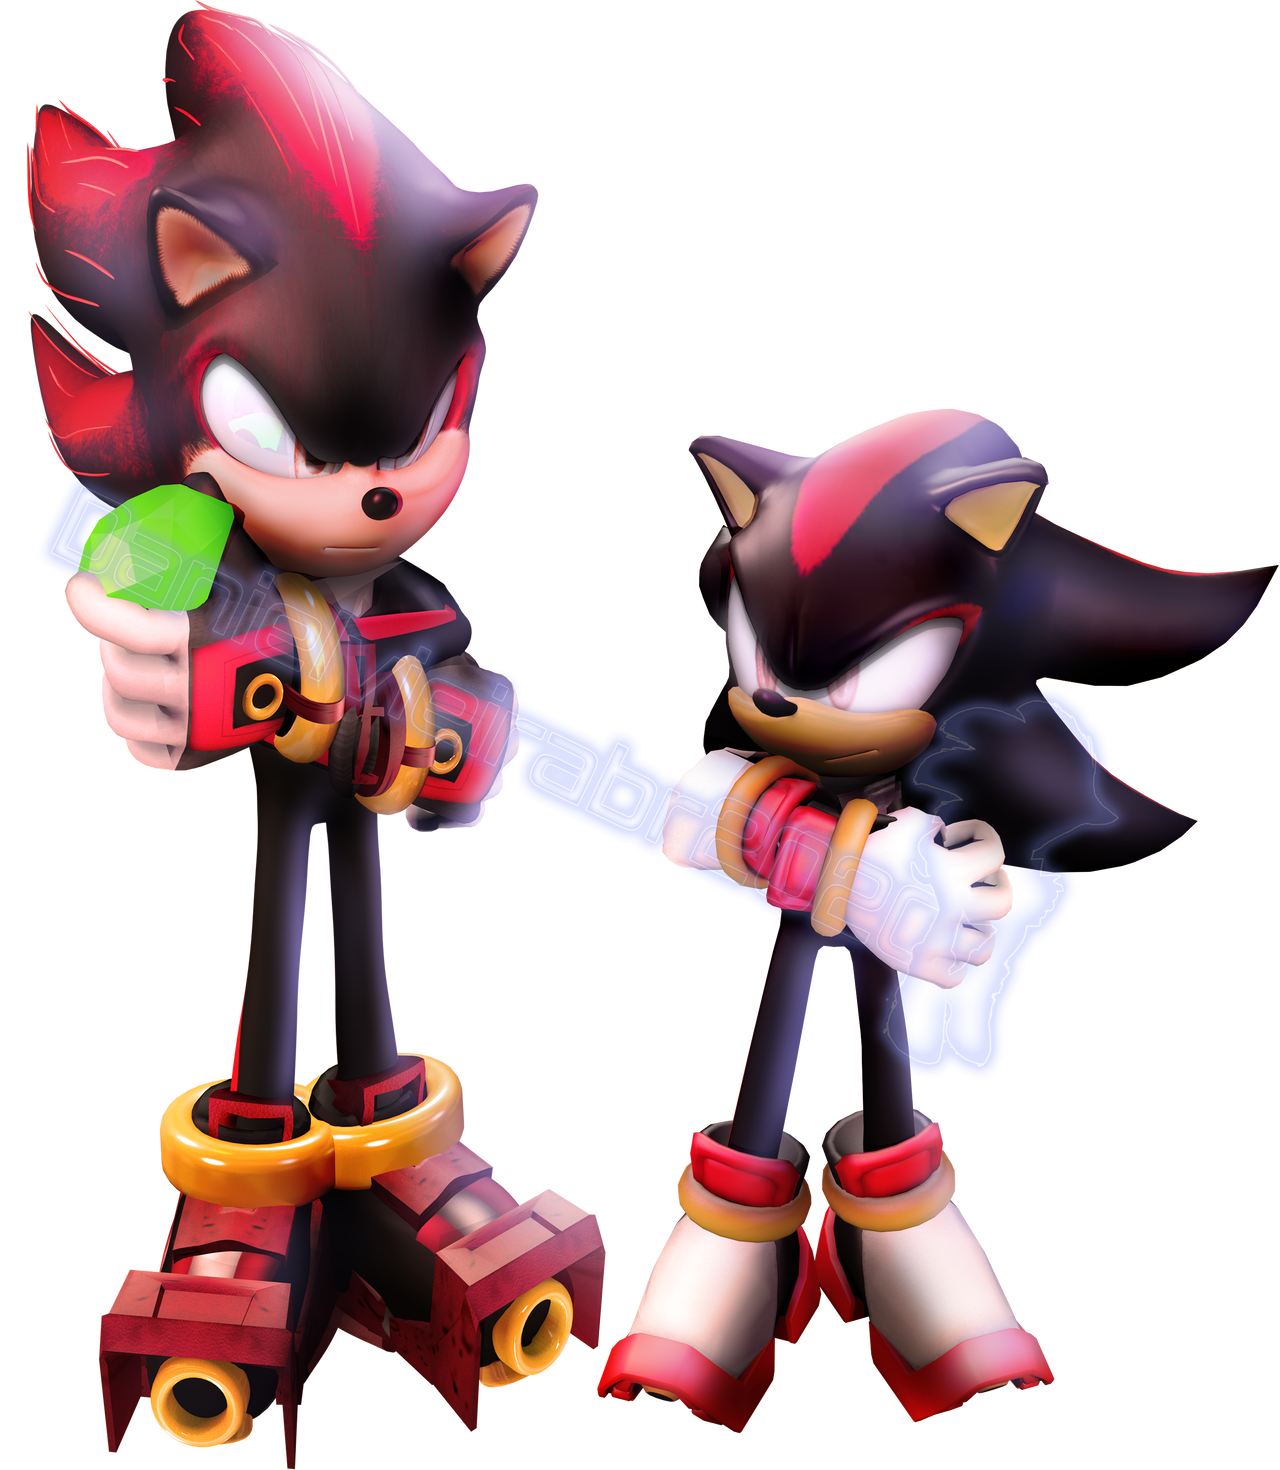 Movie Shadow and Sonic : r/SonicTheHedgehog